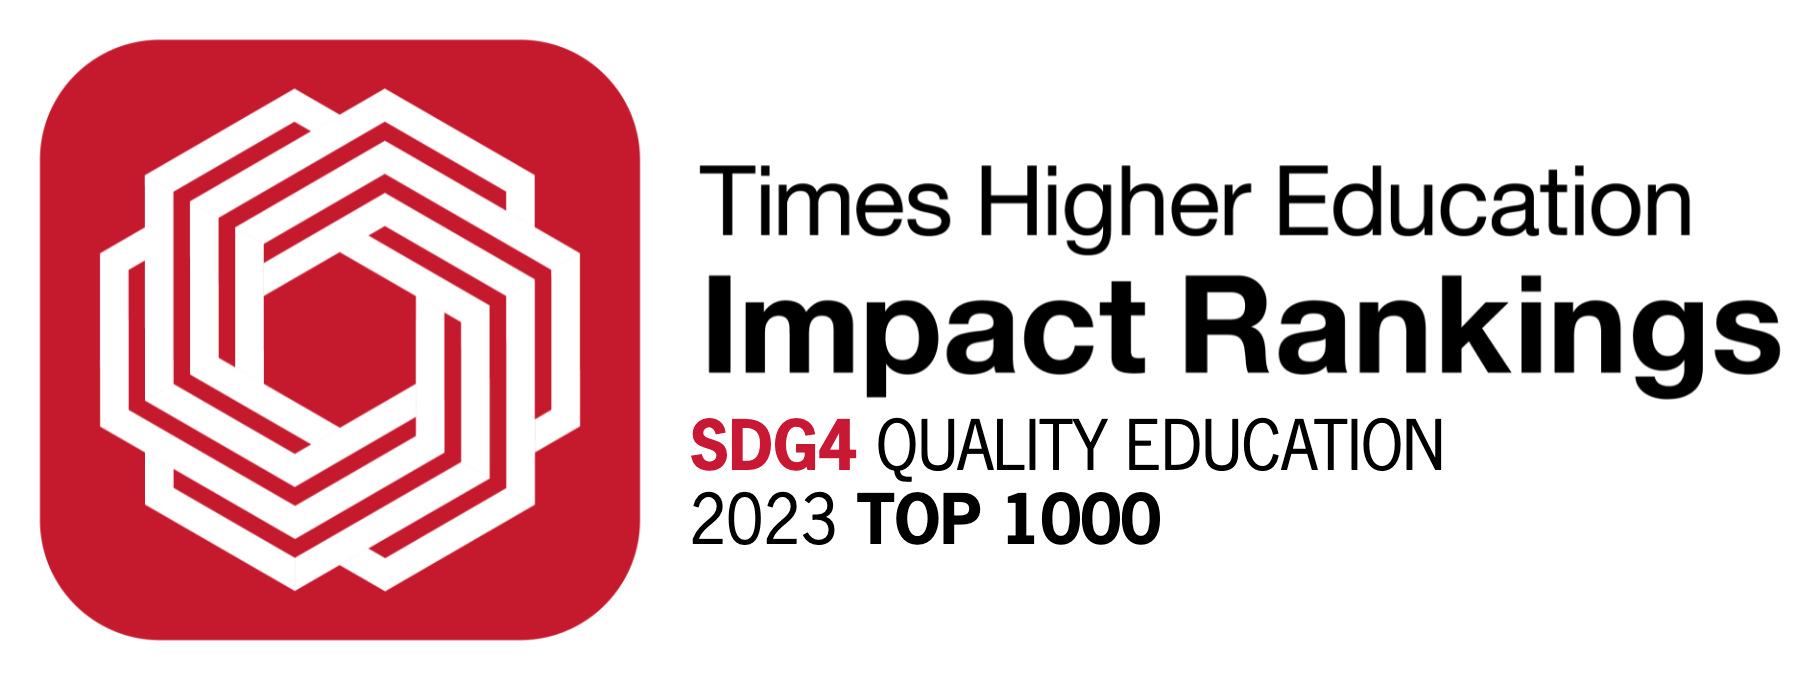 SDG4_ Quality Education - Top 1000